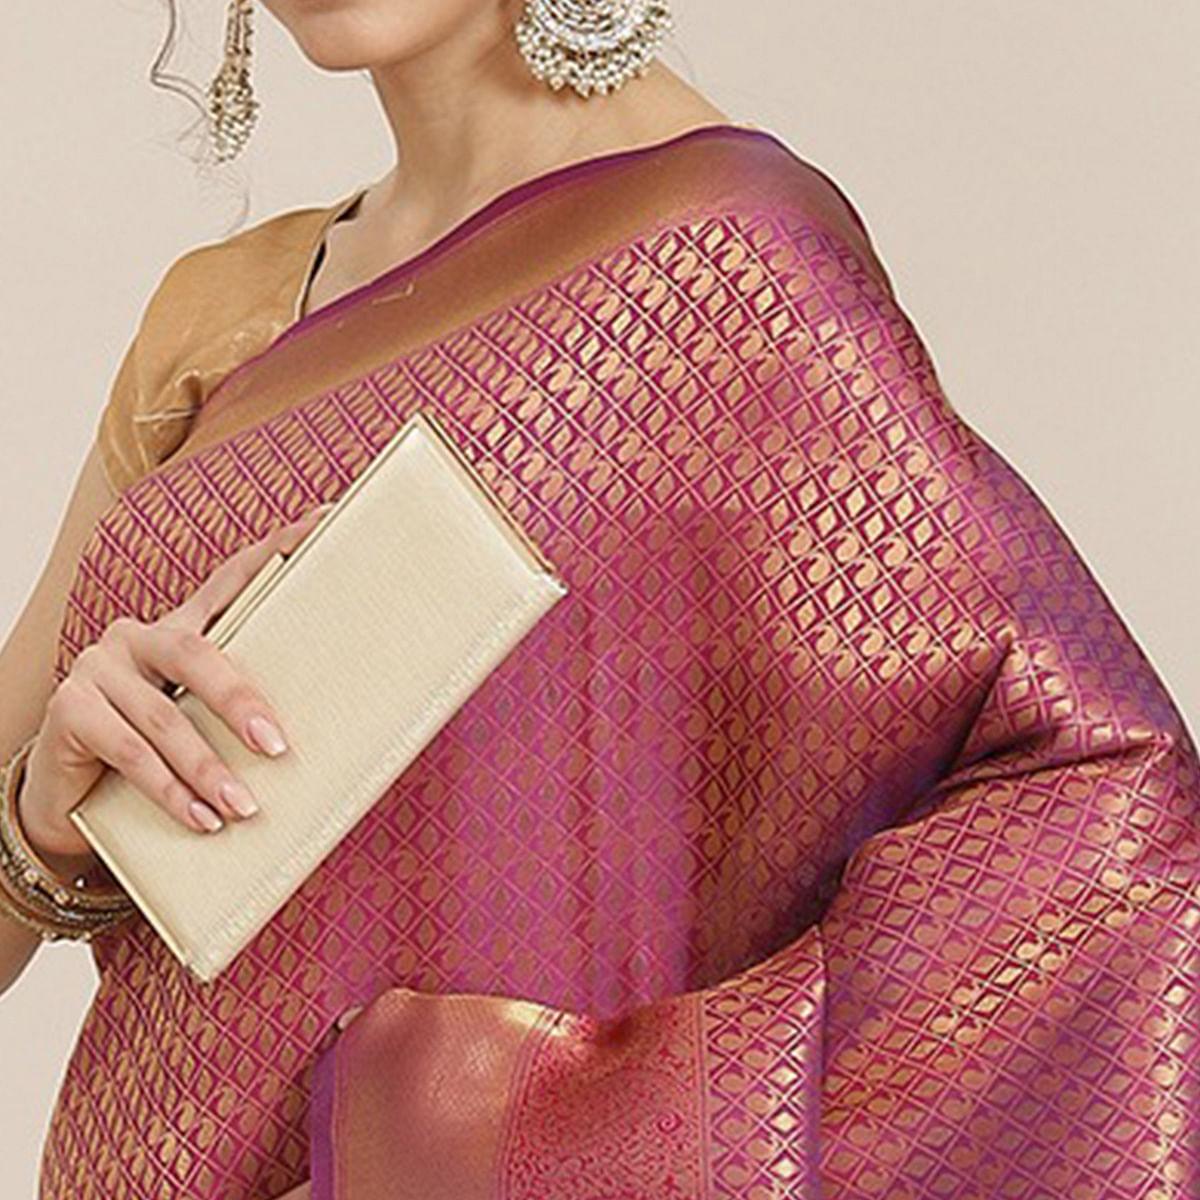 Women's Violet Festive Wear Woven Kanjivaram Silk Saree With Unstitched Blouse - Peachmode